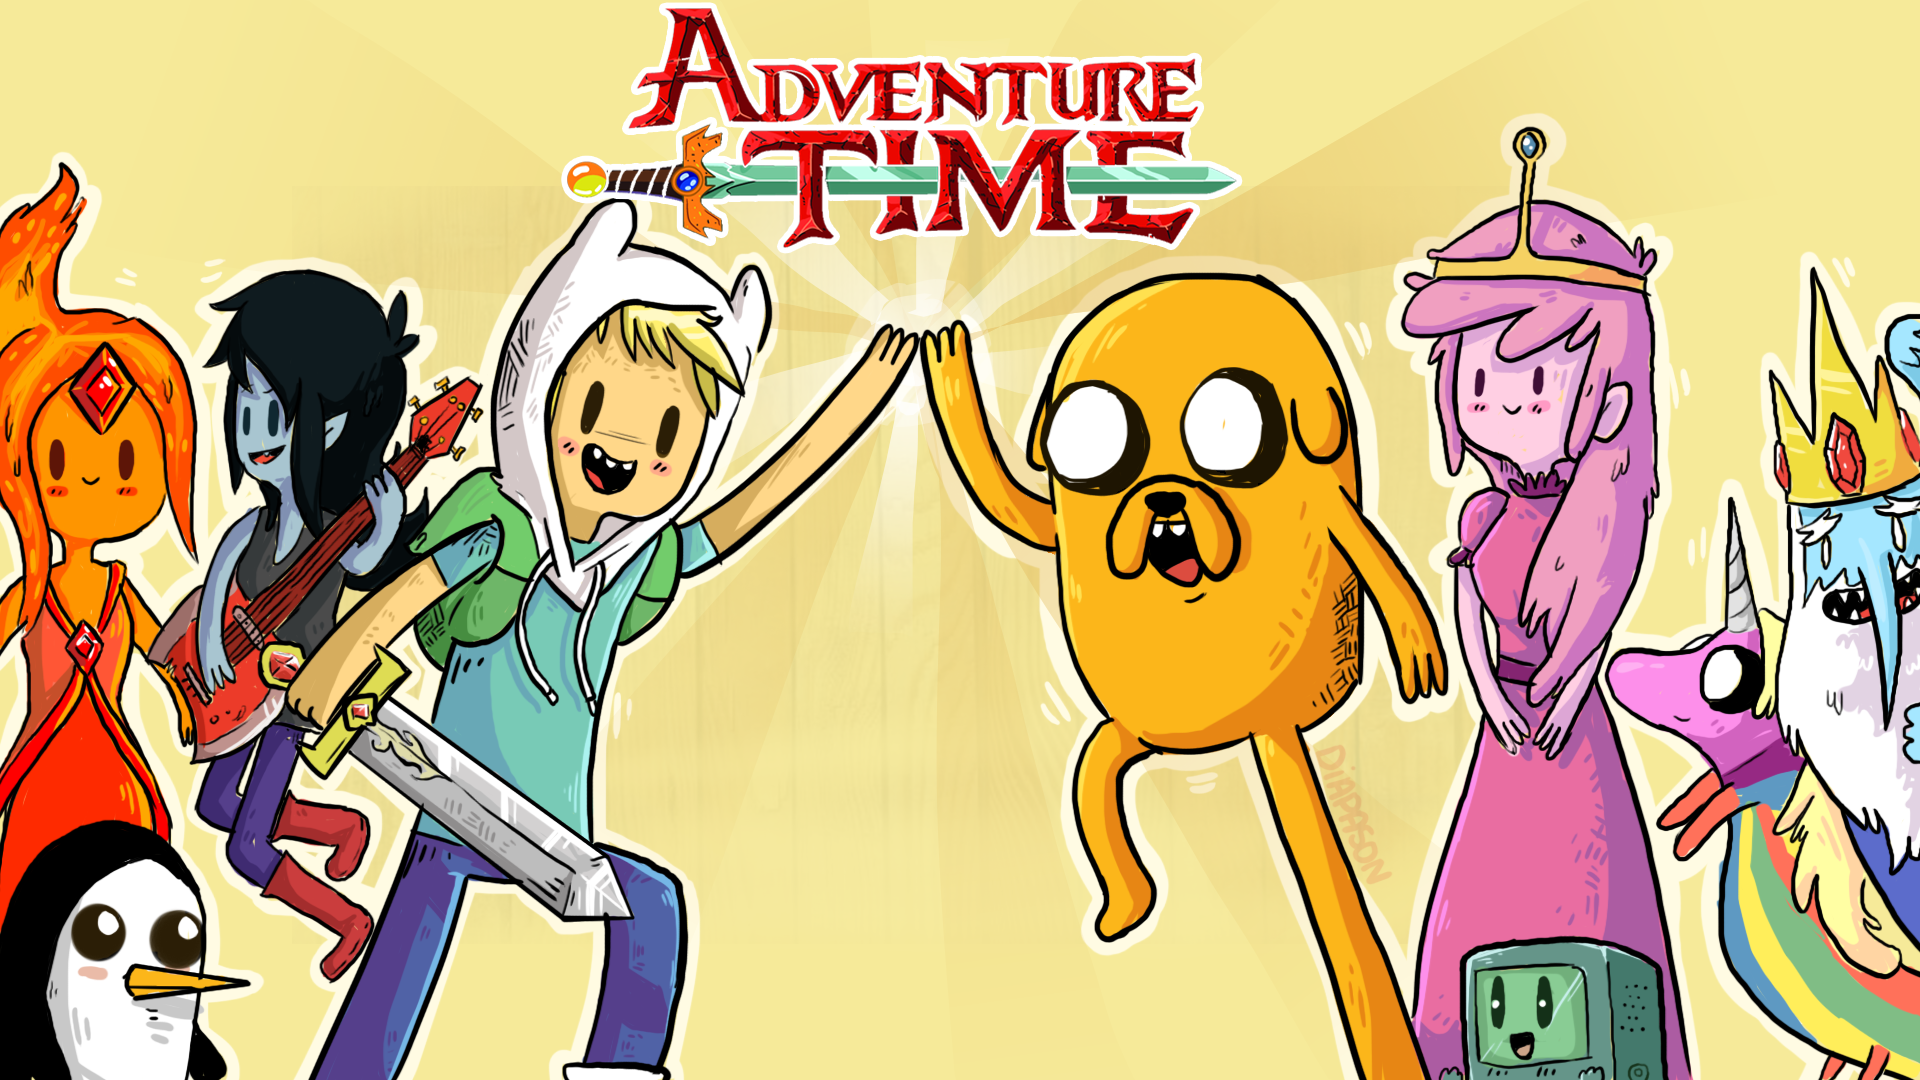 adventure time live wallpaper,cartoon,animated cartoon,illustration,games,fiction